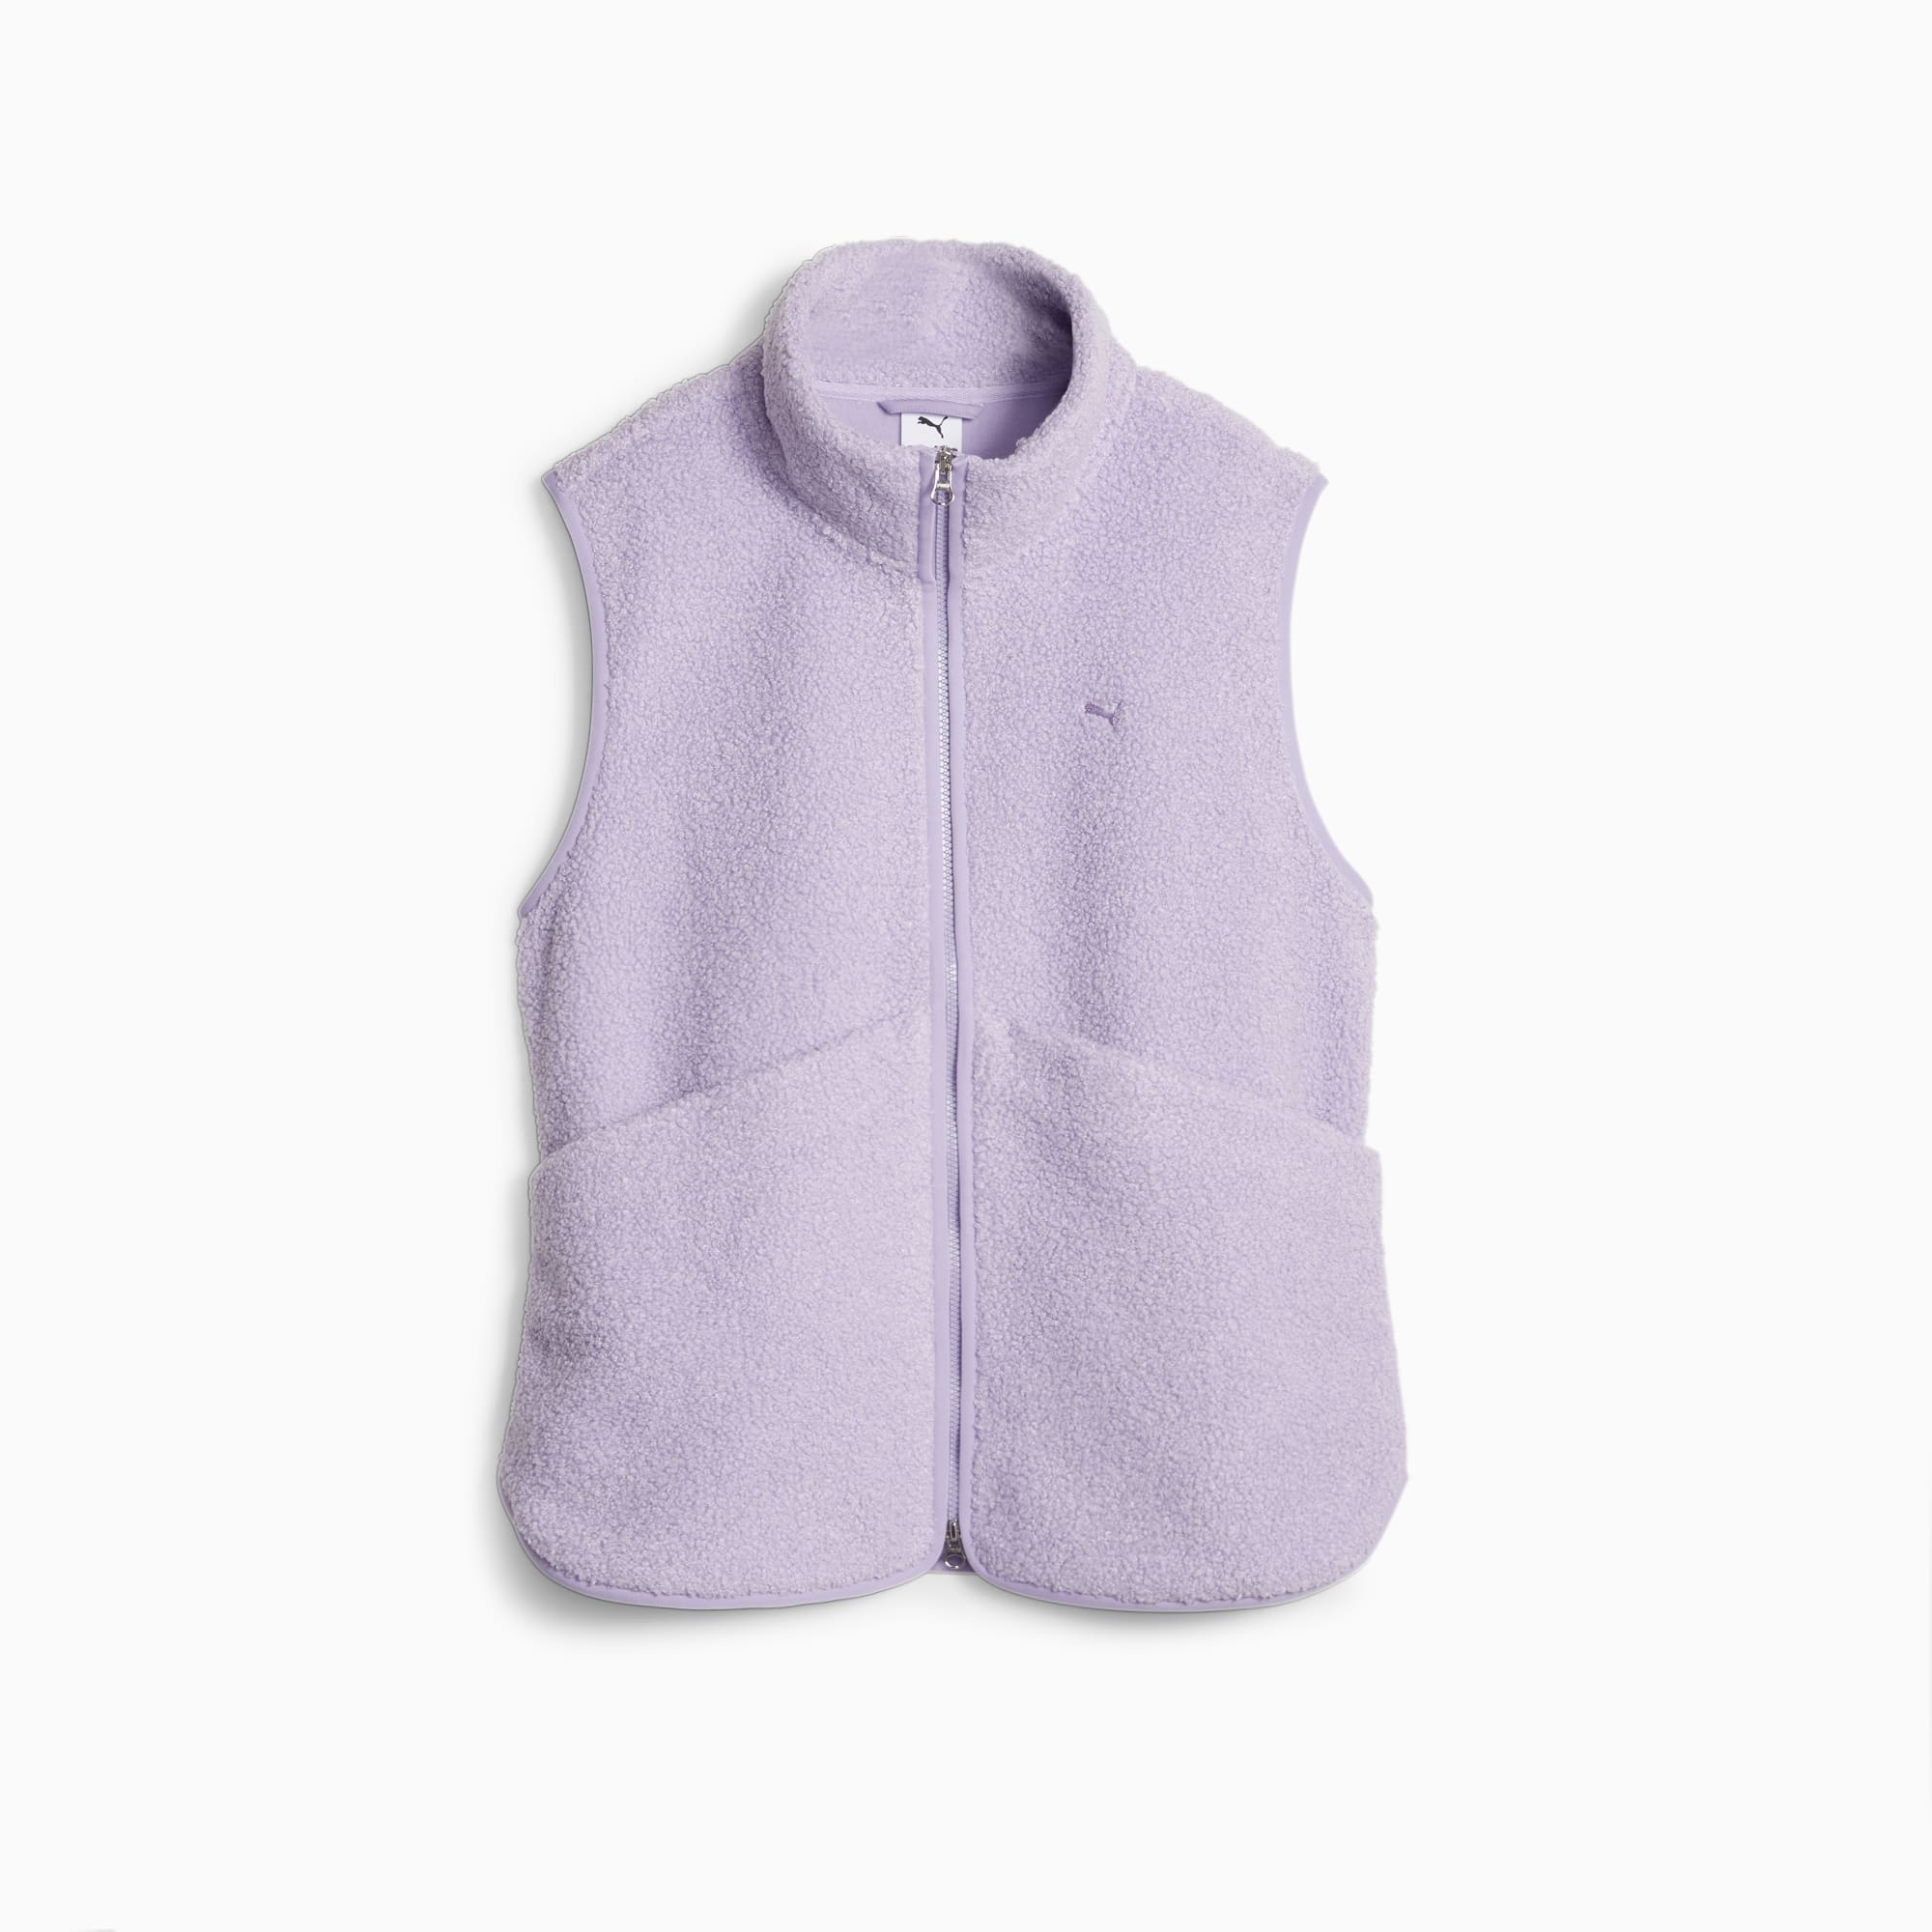 PUMA Yona Women's Fleece Vest Women's Jacket, Vivid Viola, Size XXS, Clothing